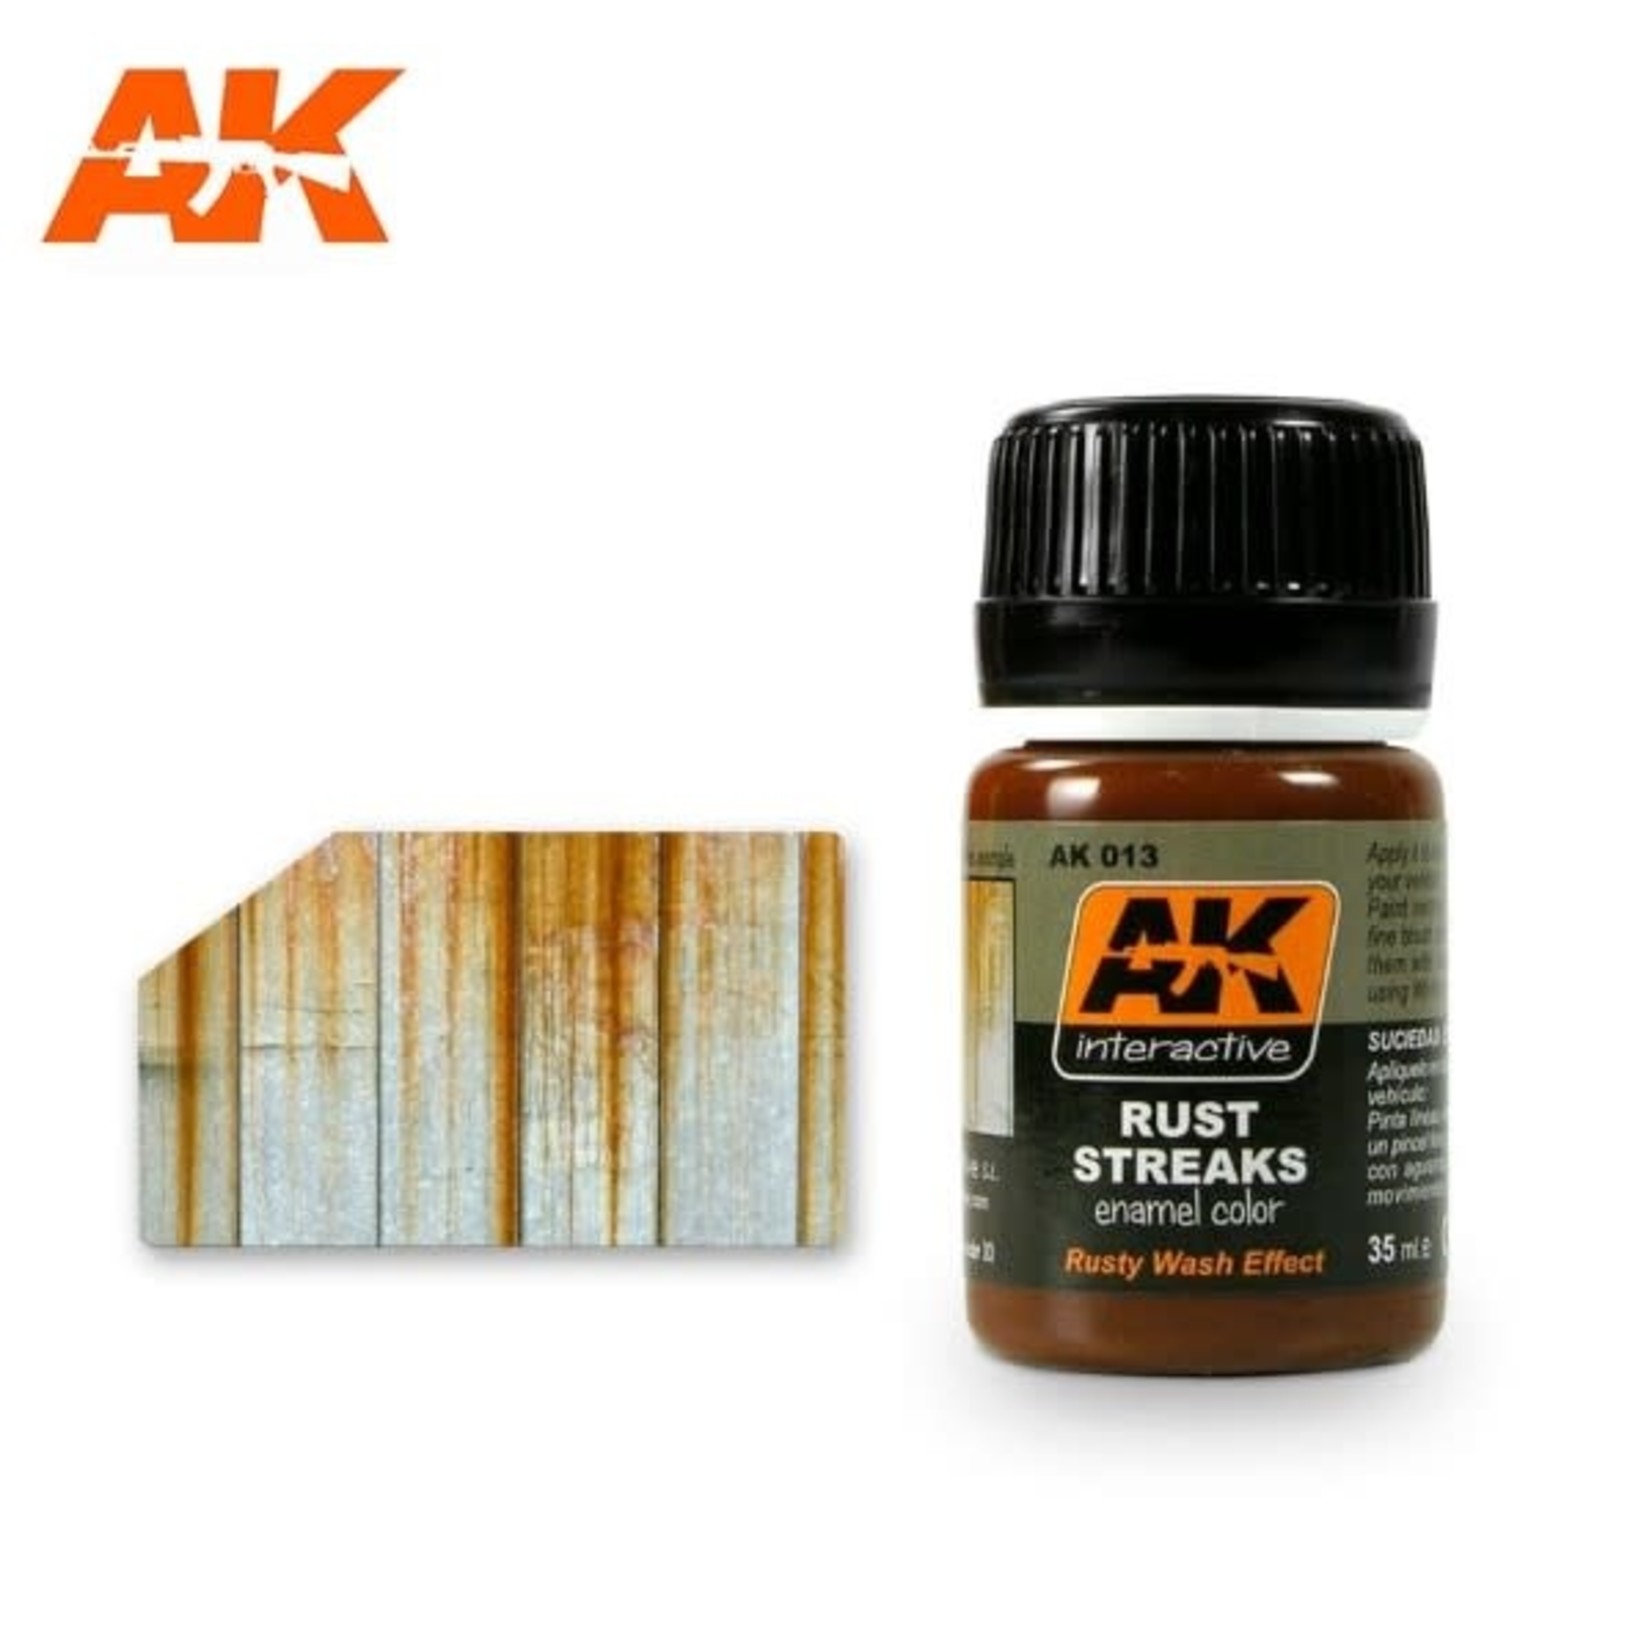 AK Interactive AK-013 Rust Streaks